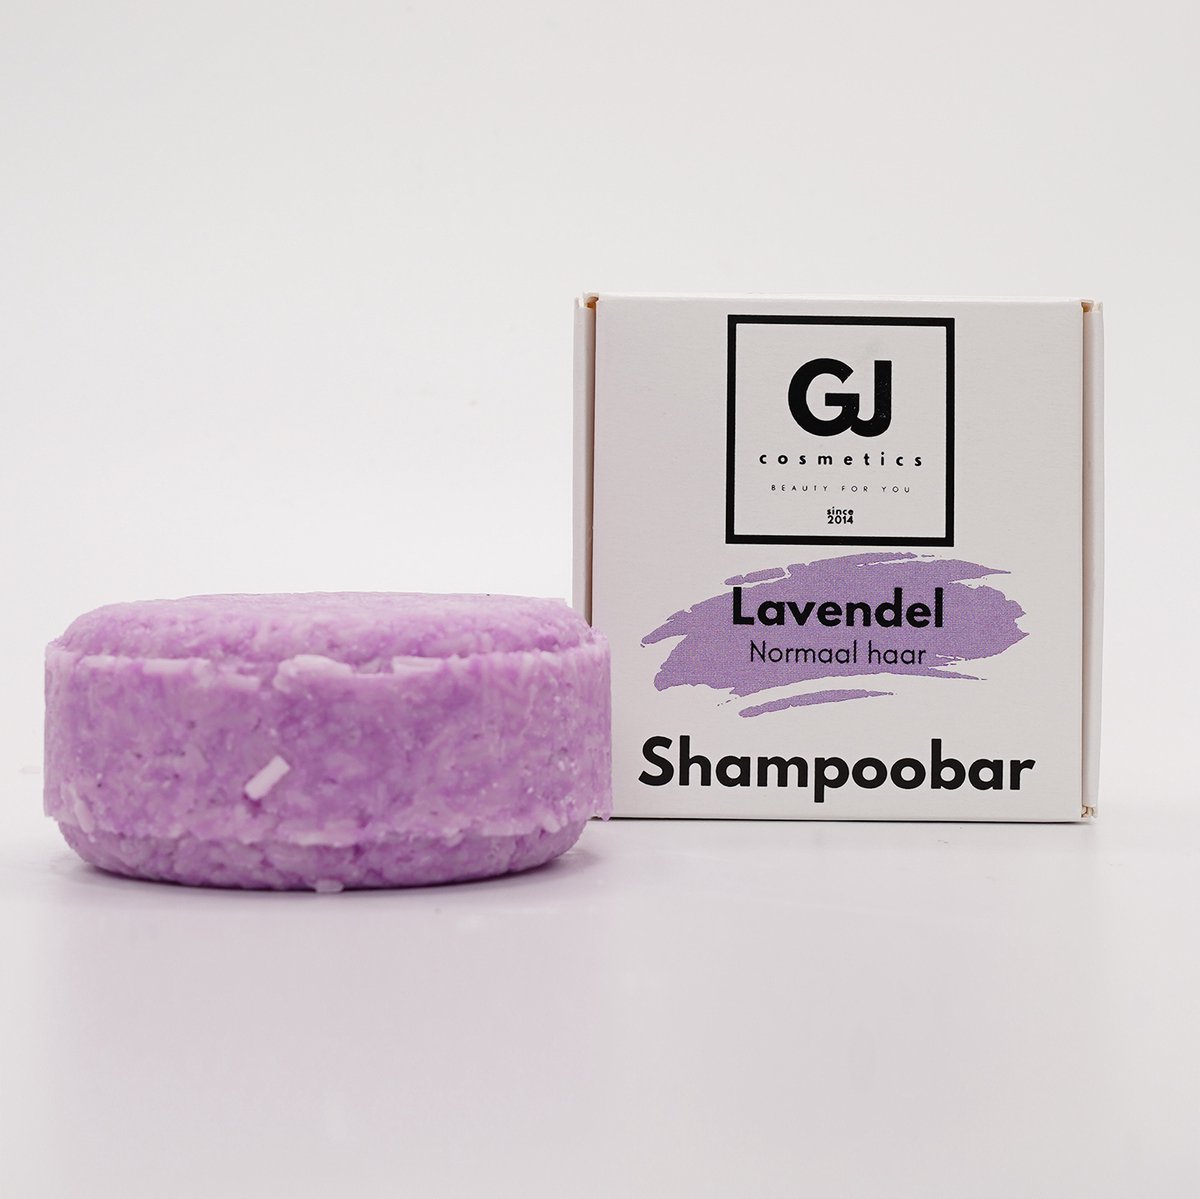 GJ Cosmetics Shampoobar Lavendel